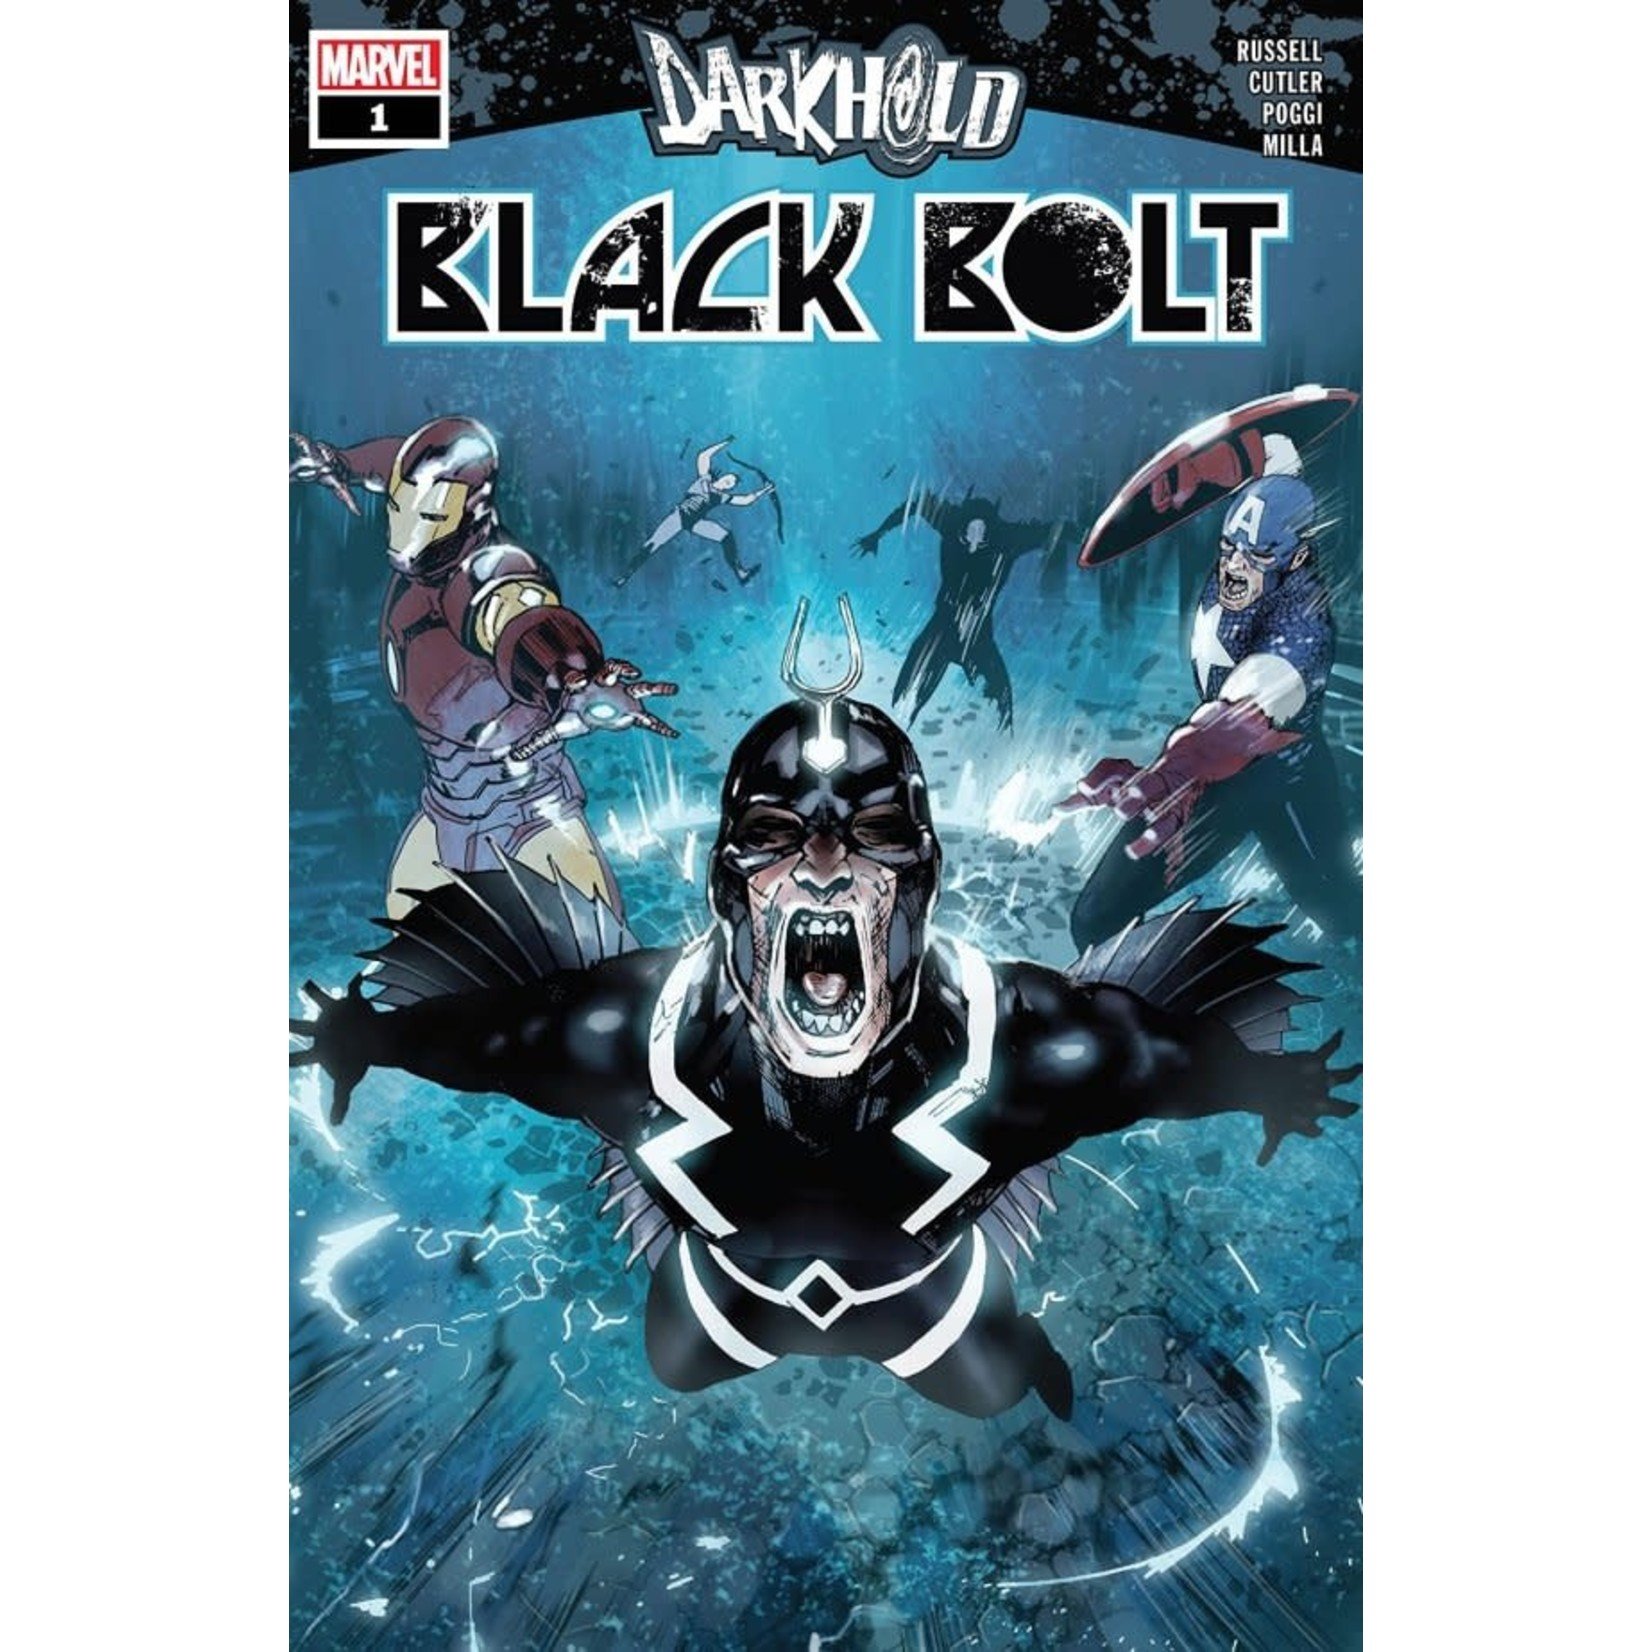 Marvel Darkhold: Black Bolt #1